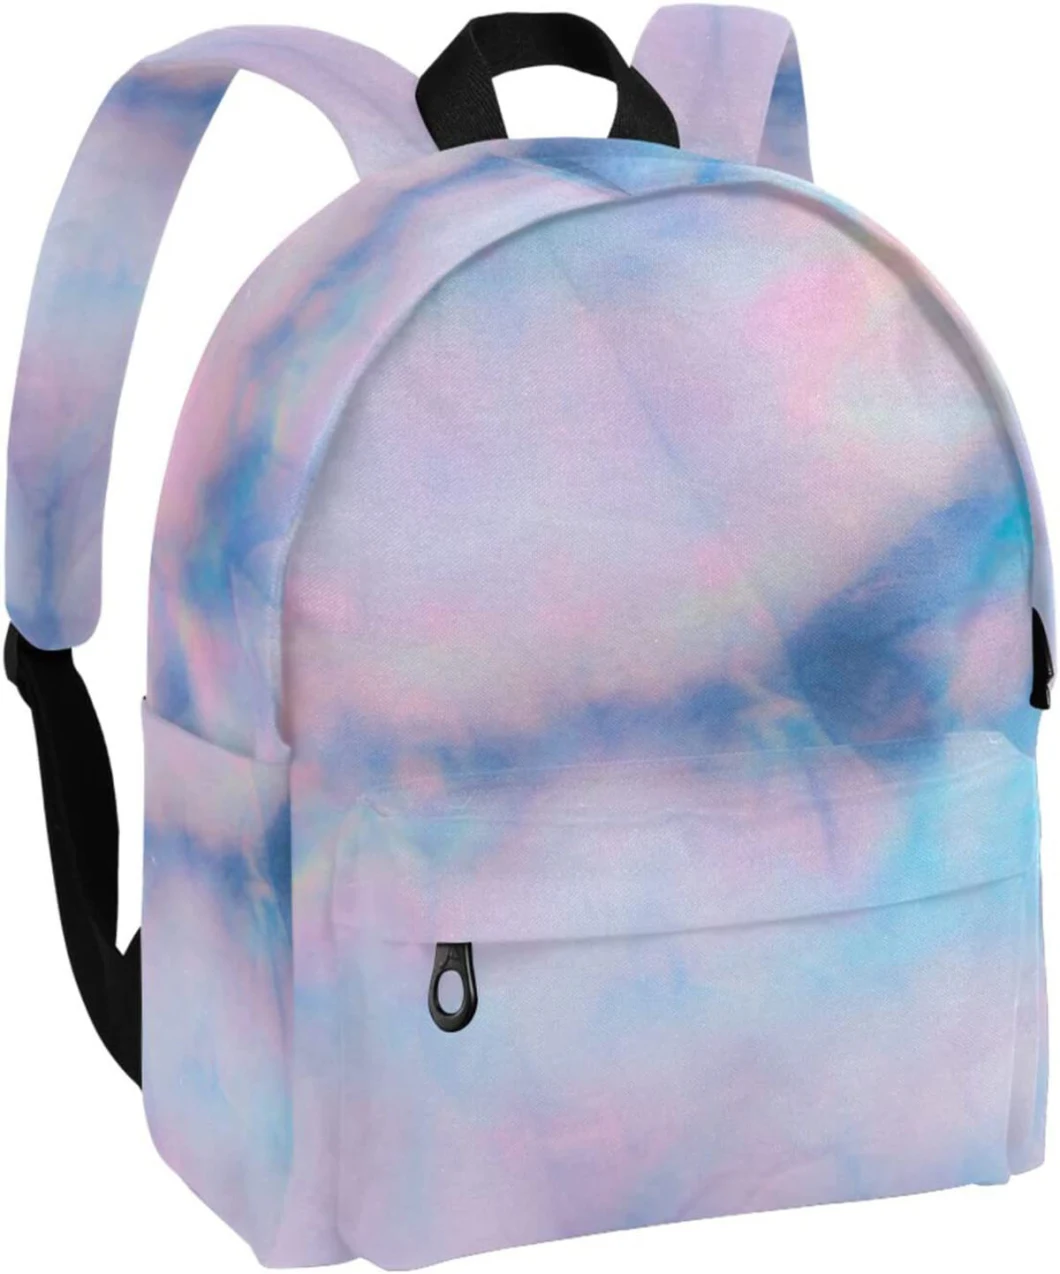 Kids Teen Boys Girls Student Laptop Backpack School Bag